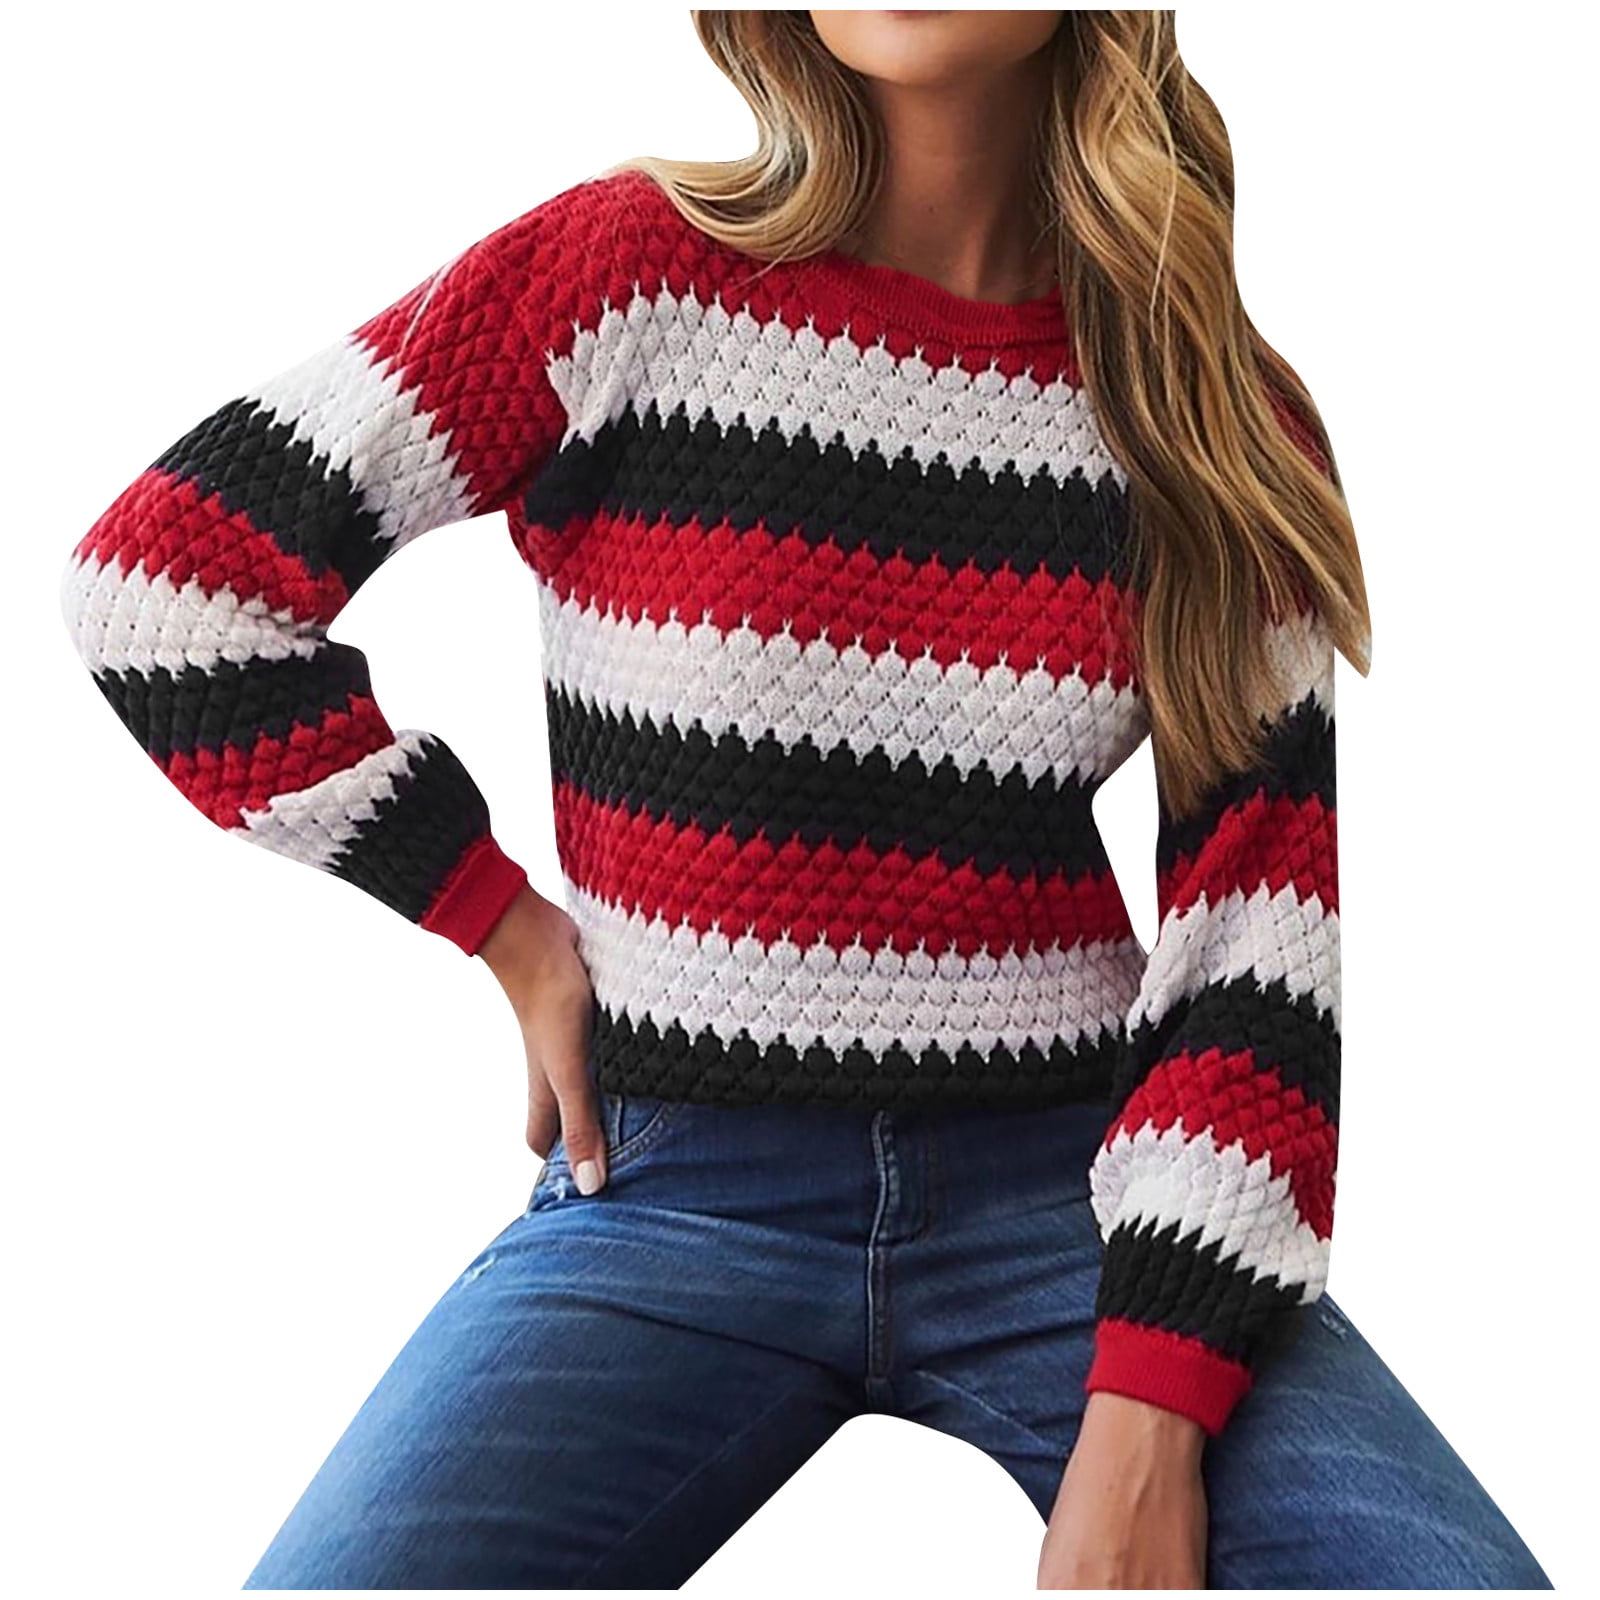 Lazapa Plush Sweater for Women Stripe Colorblock Loose Sweatshirt Fall Daily Warm Pullover Ultra Soft Fashion Tops Match with Black Slacks Denim Jeans 